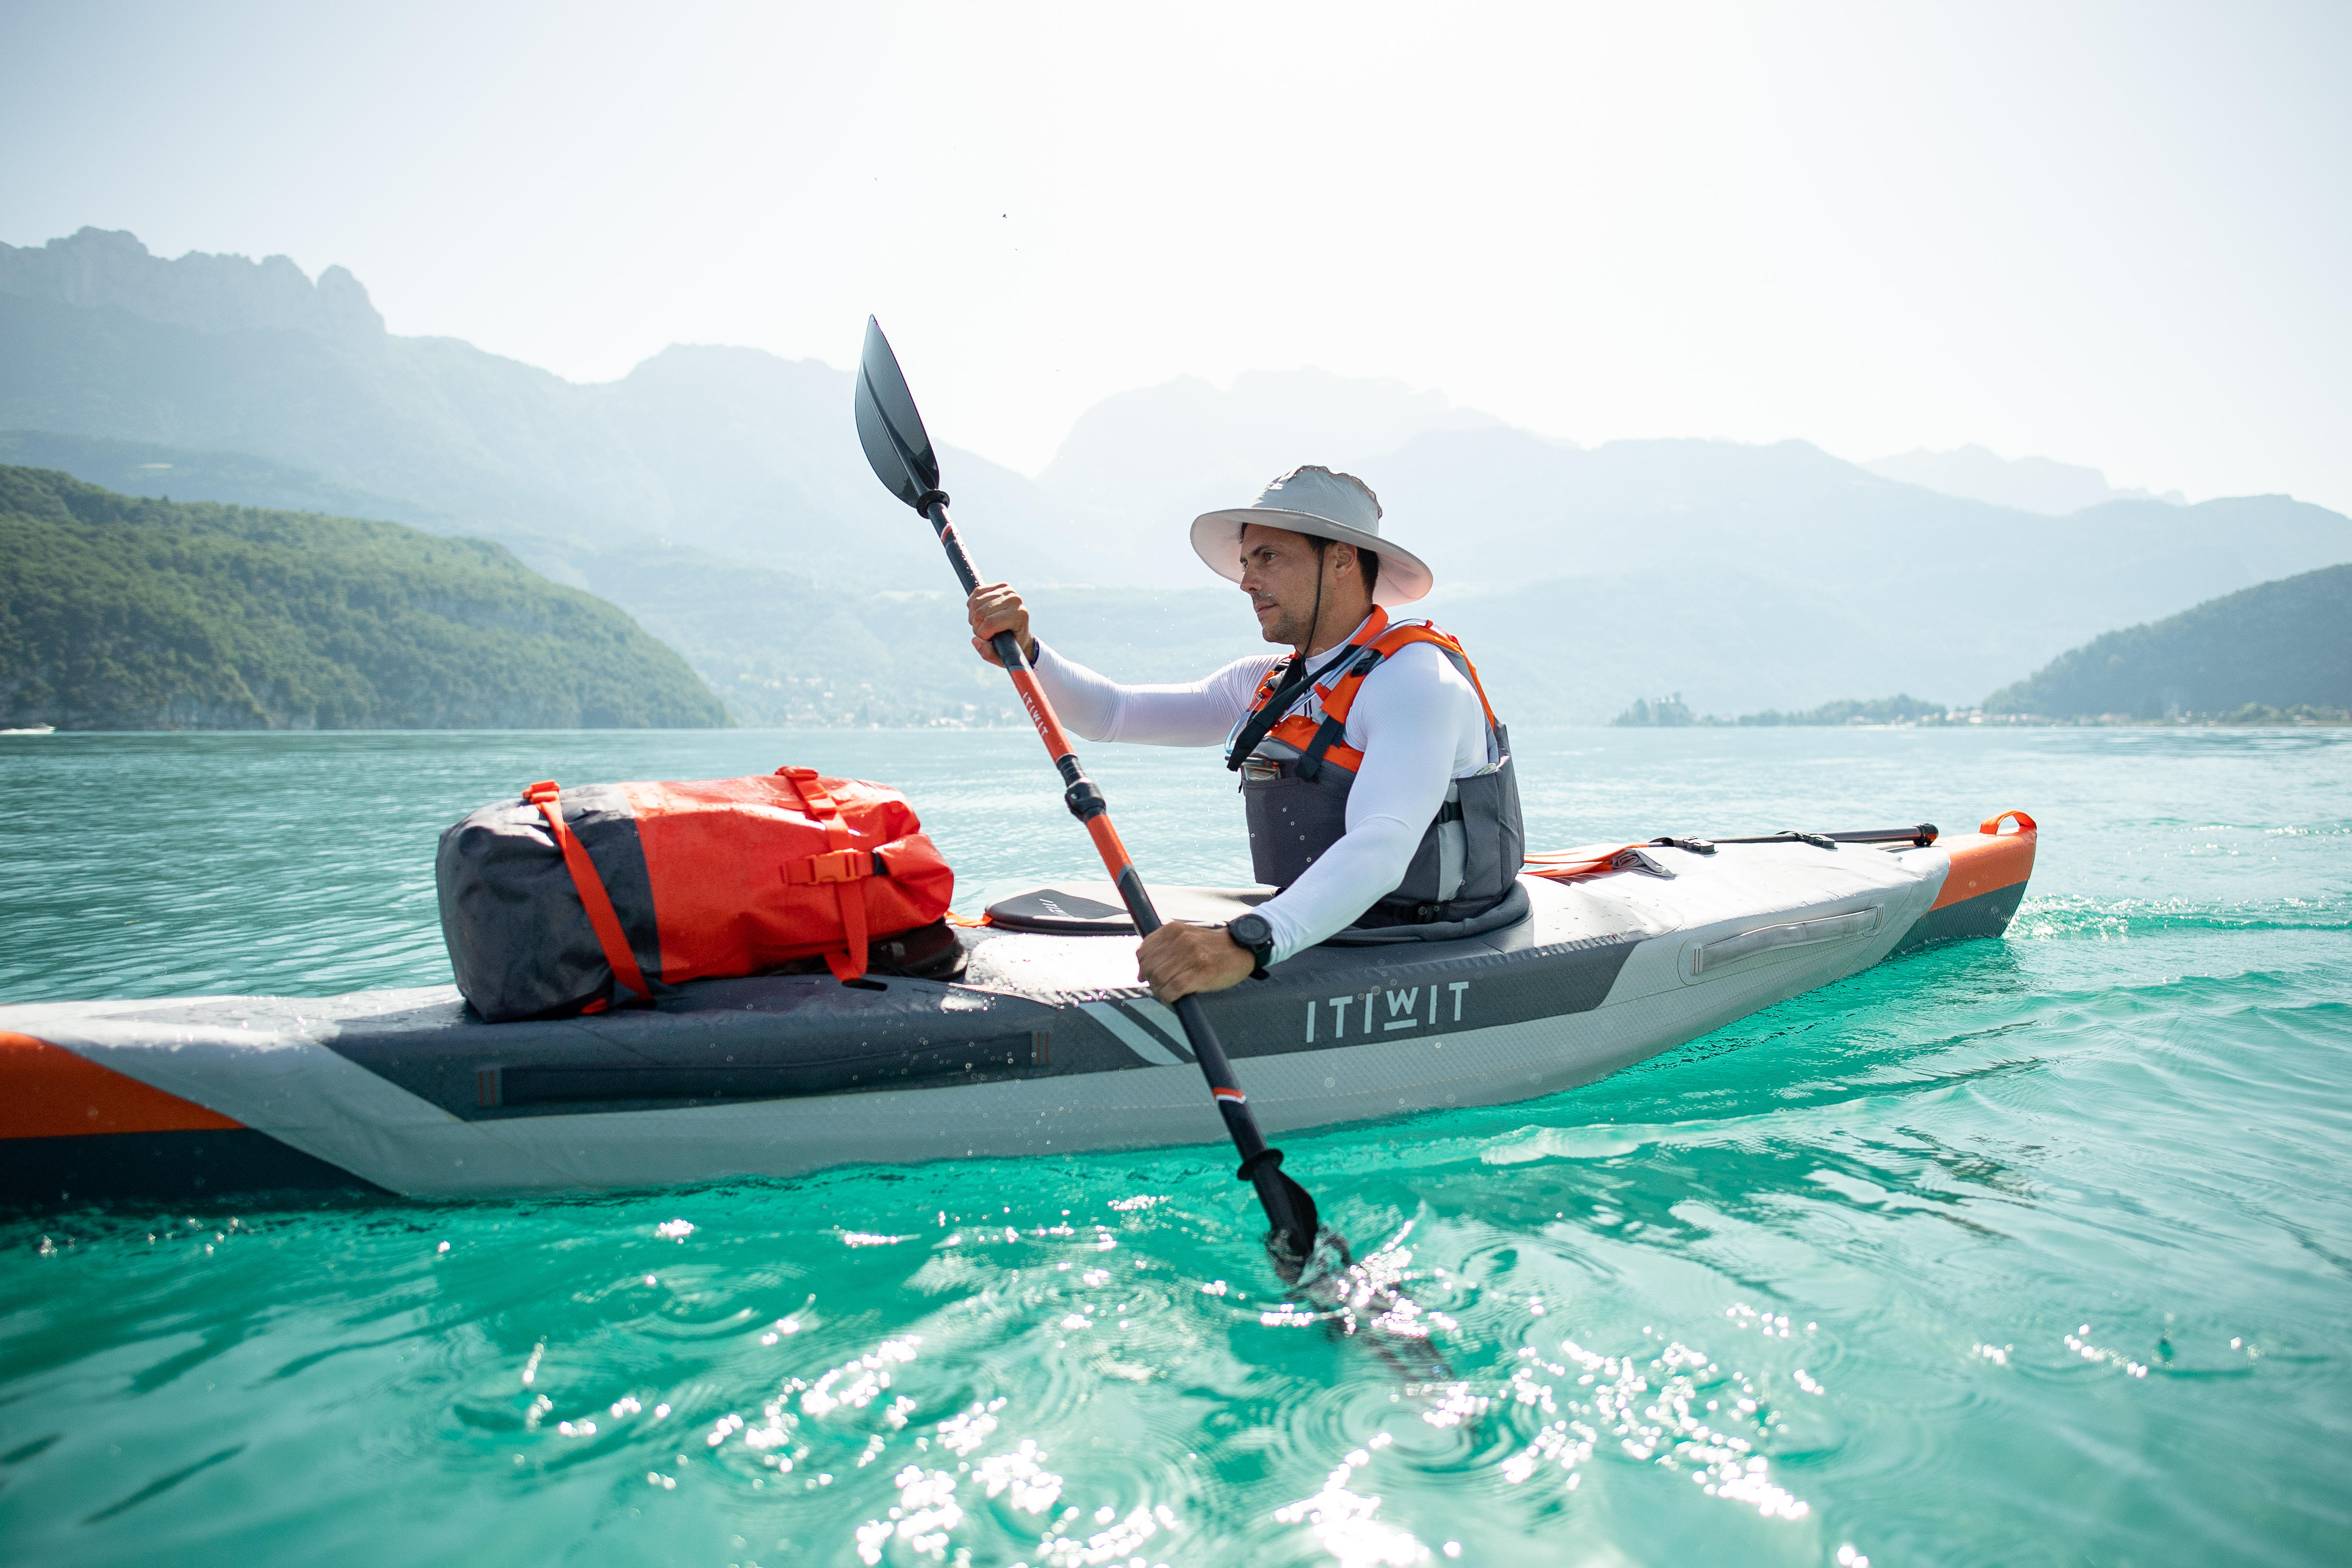 20L Outdoor Waterproof Dry Bag For Canoe Kayak Rafting Camping Hiking USA K8A3 